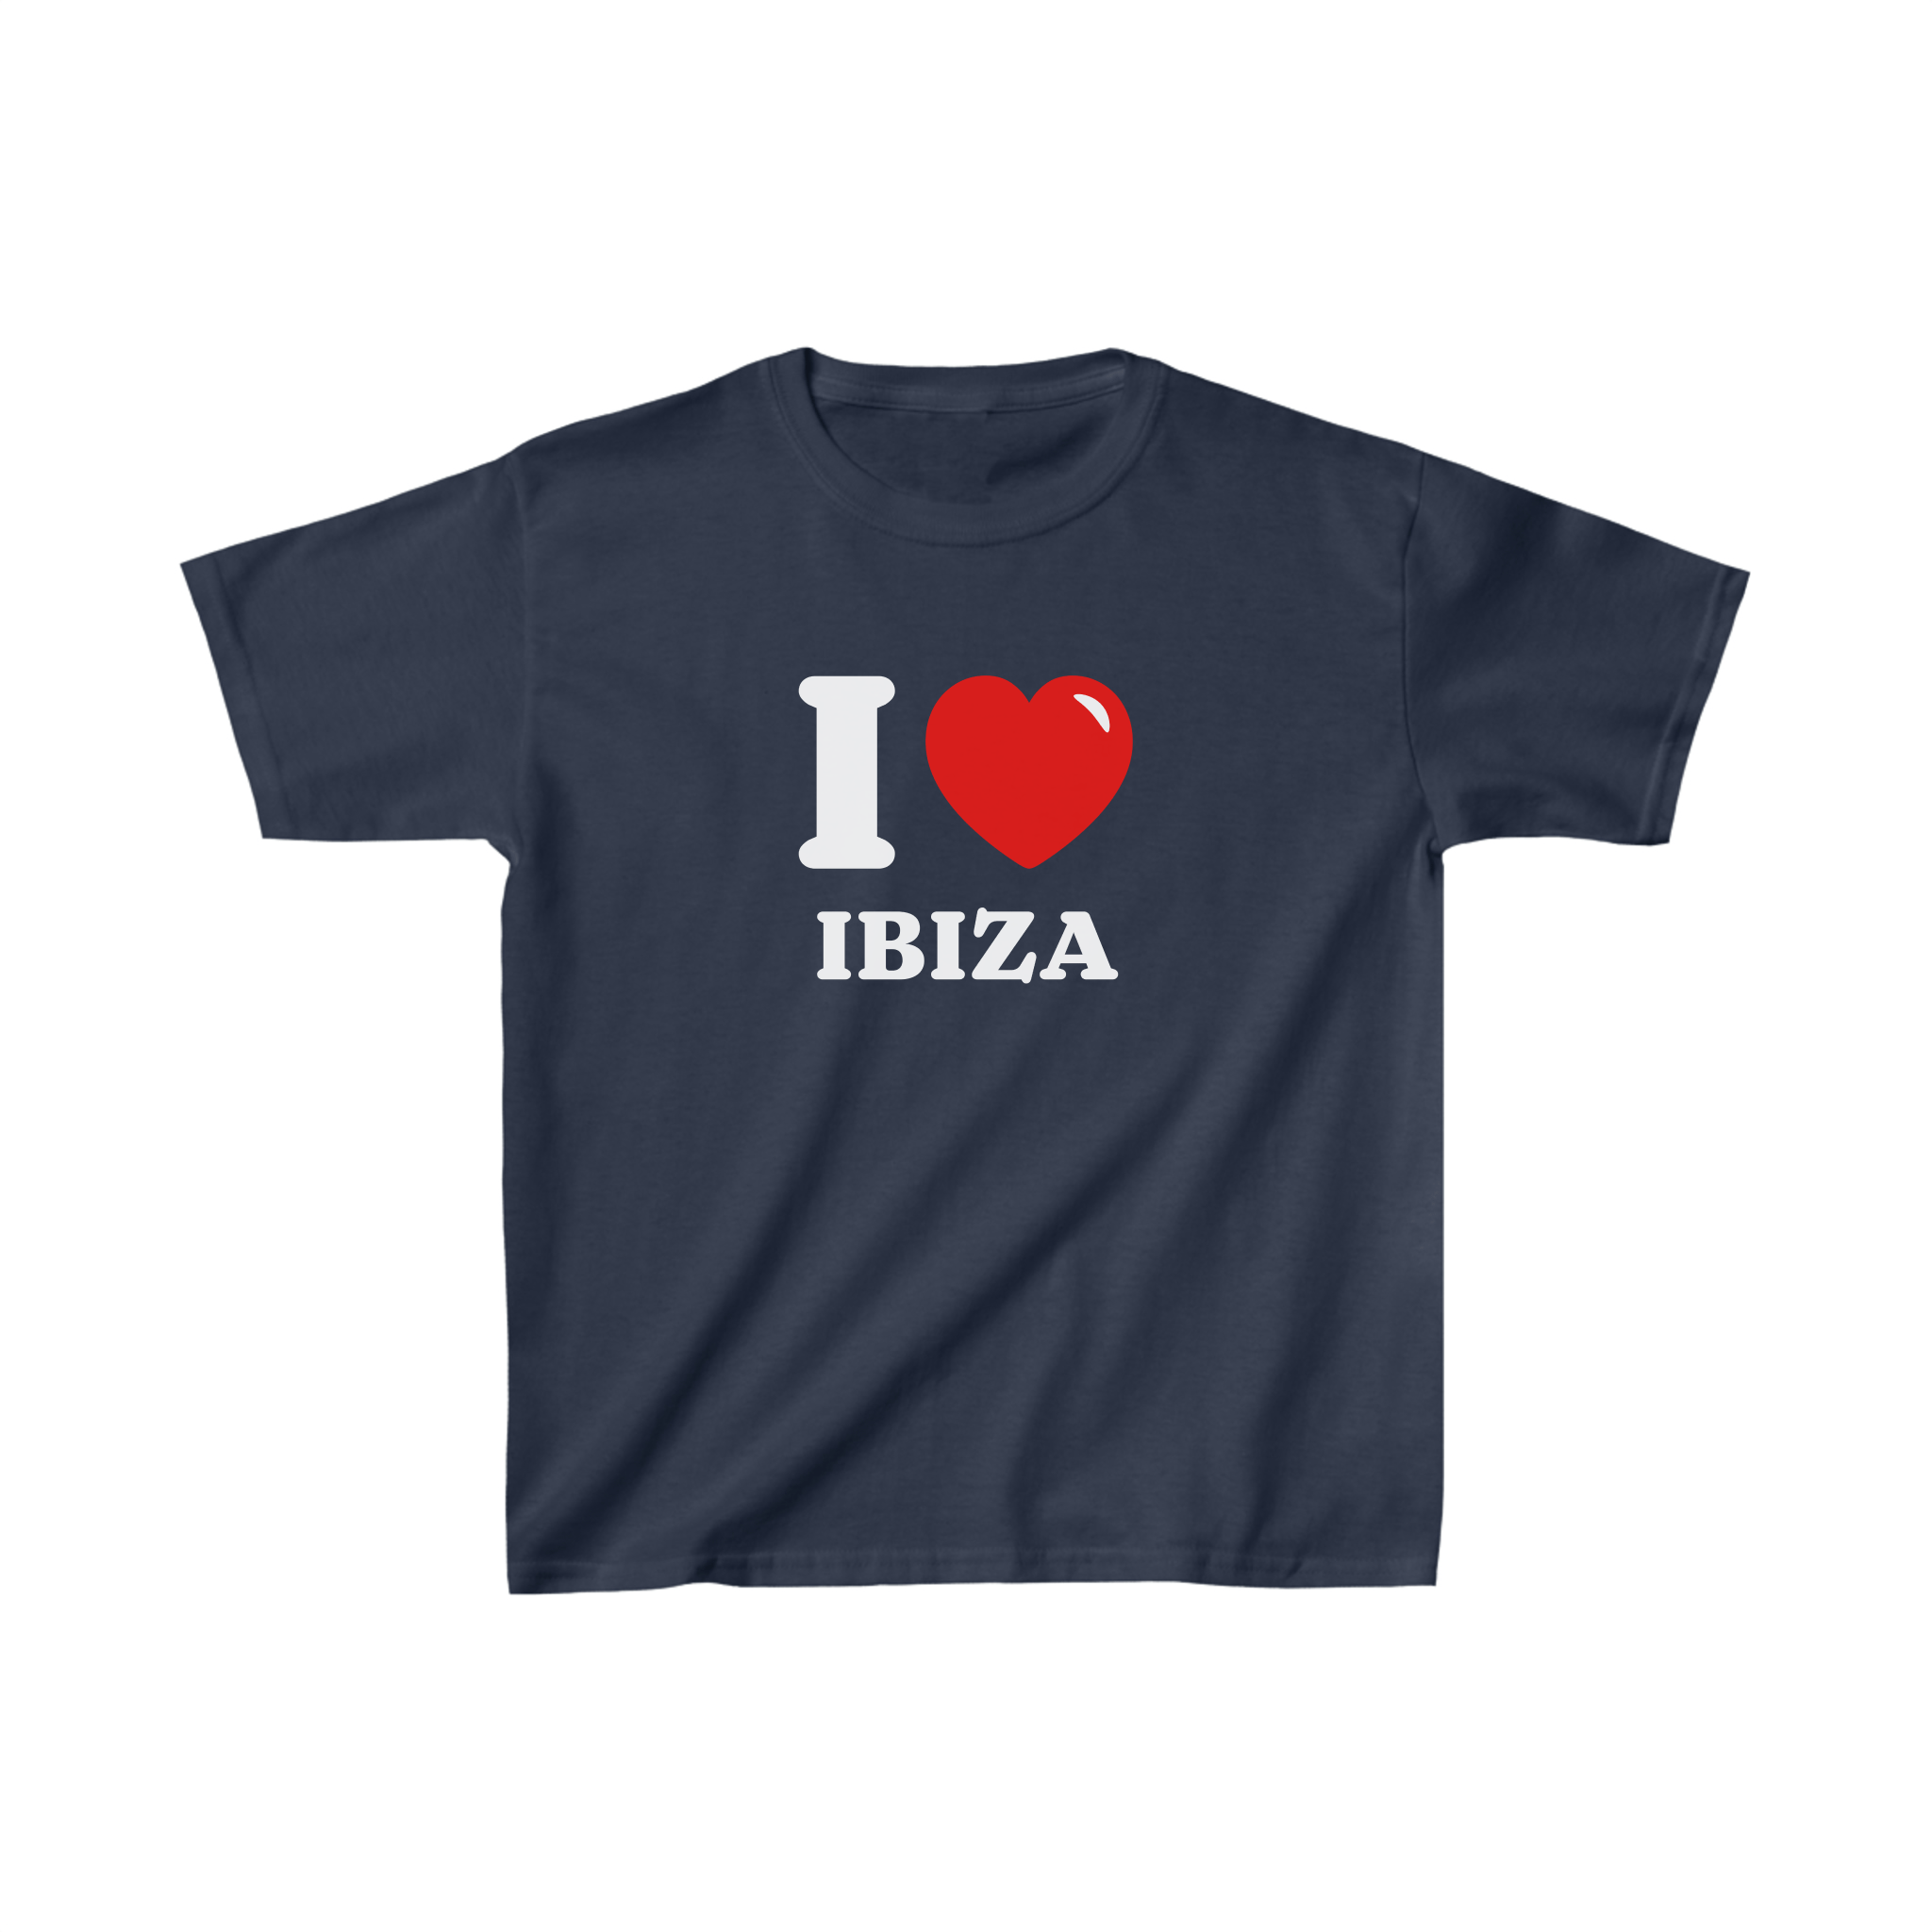 'I love Ibiza' baby tee - In Print We Trust